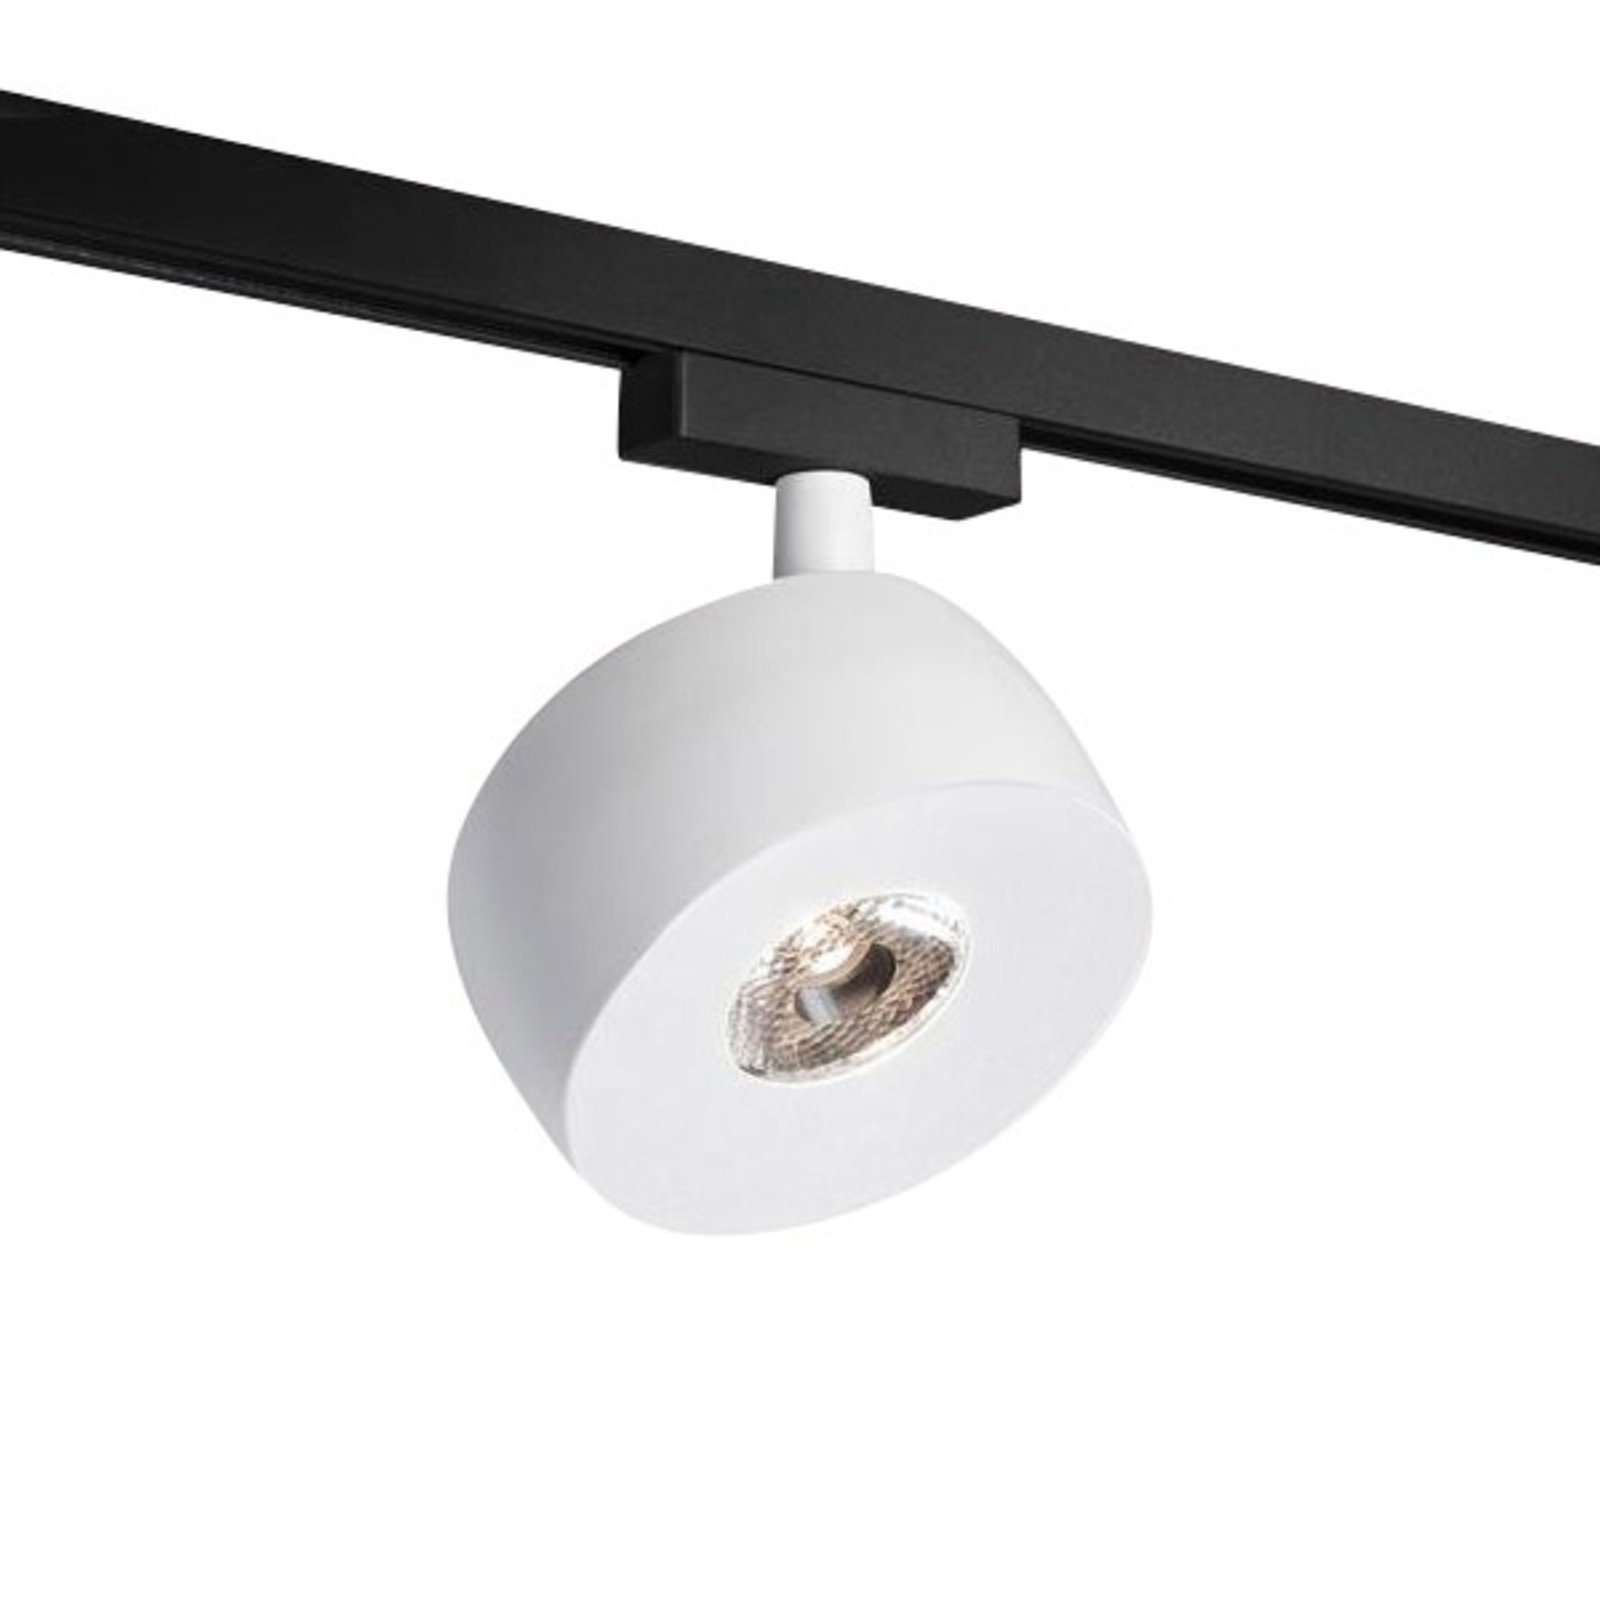 LED-skenspot Vibo Volare 927 vit/svart 35°